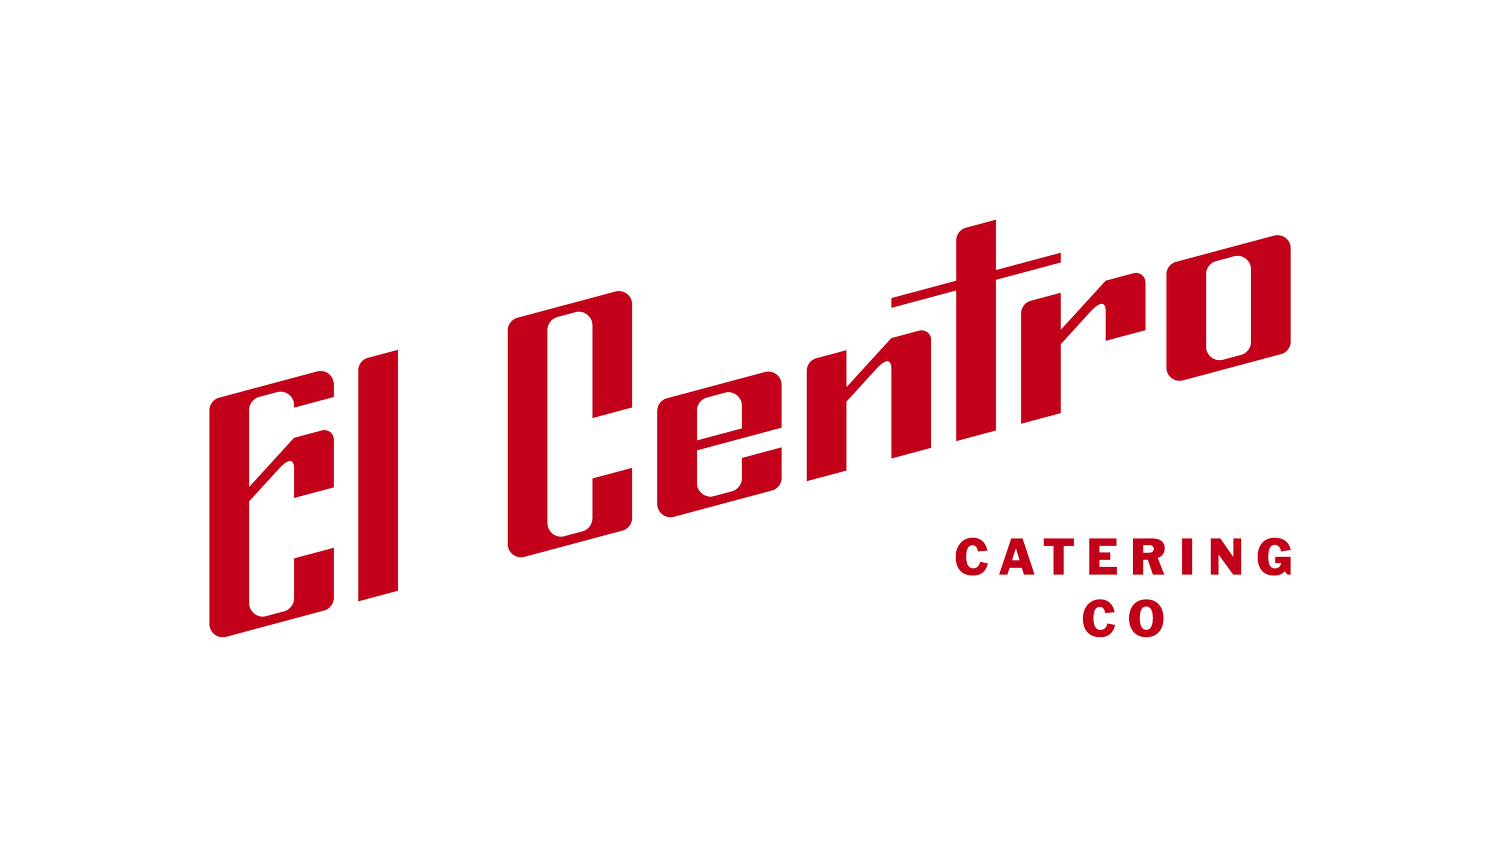 El Centro Catering